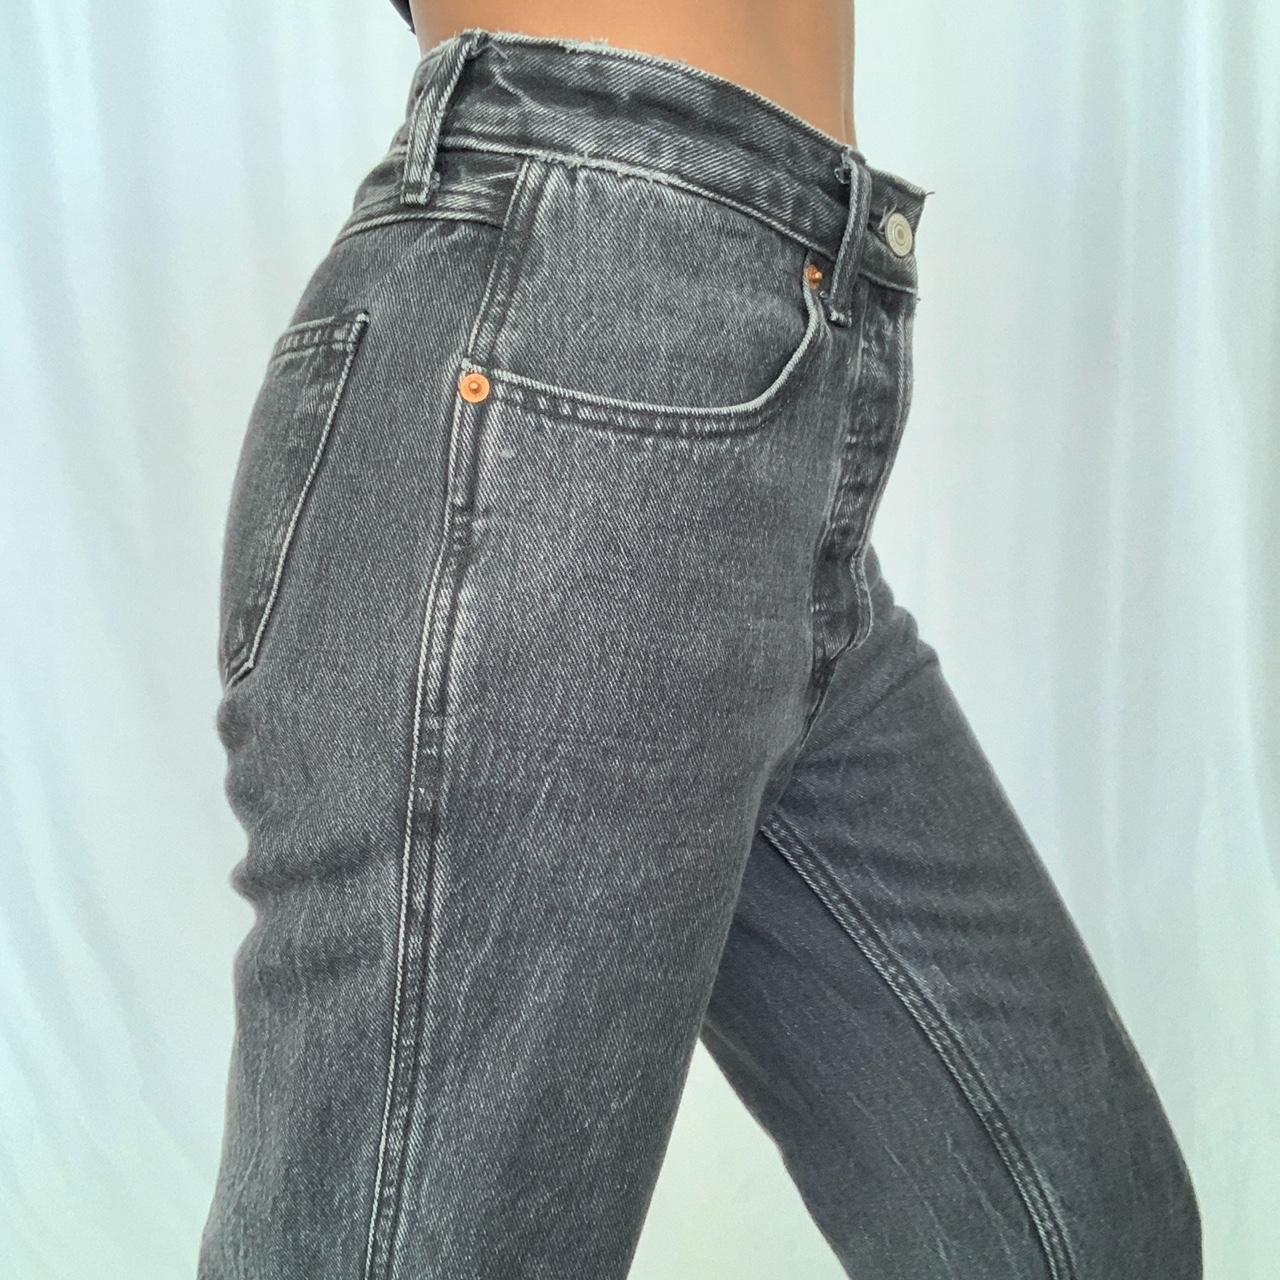 Abercrombie & Fitch Women's Black Jeans (4)